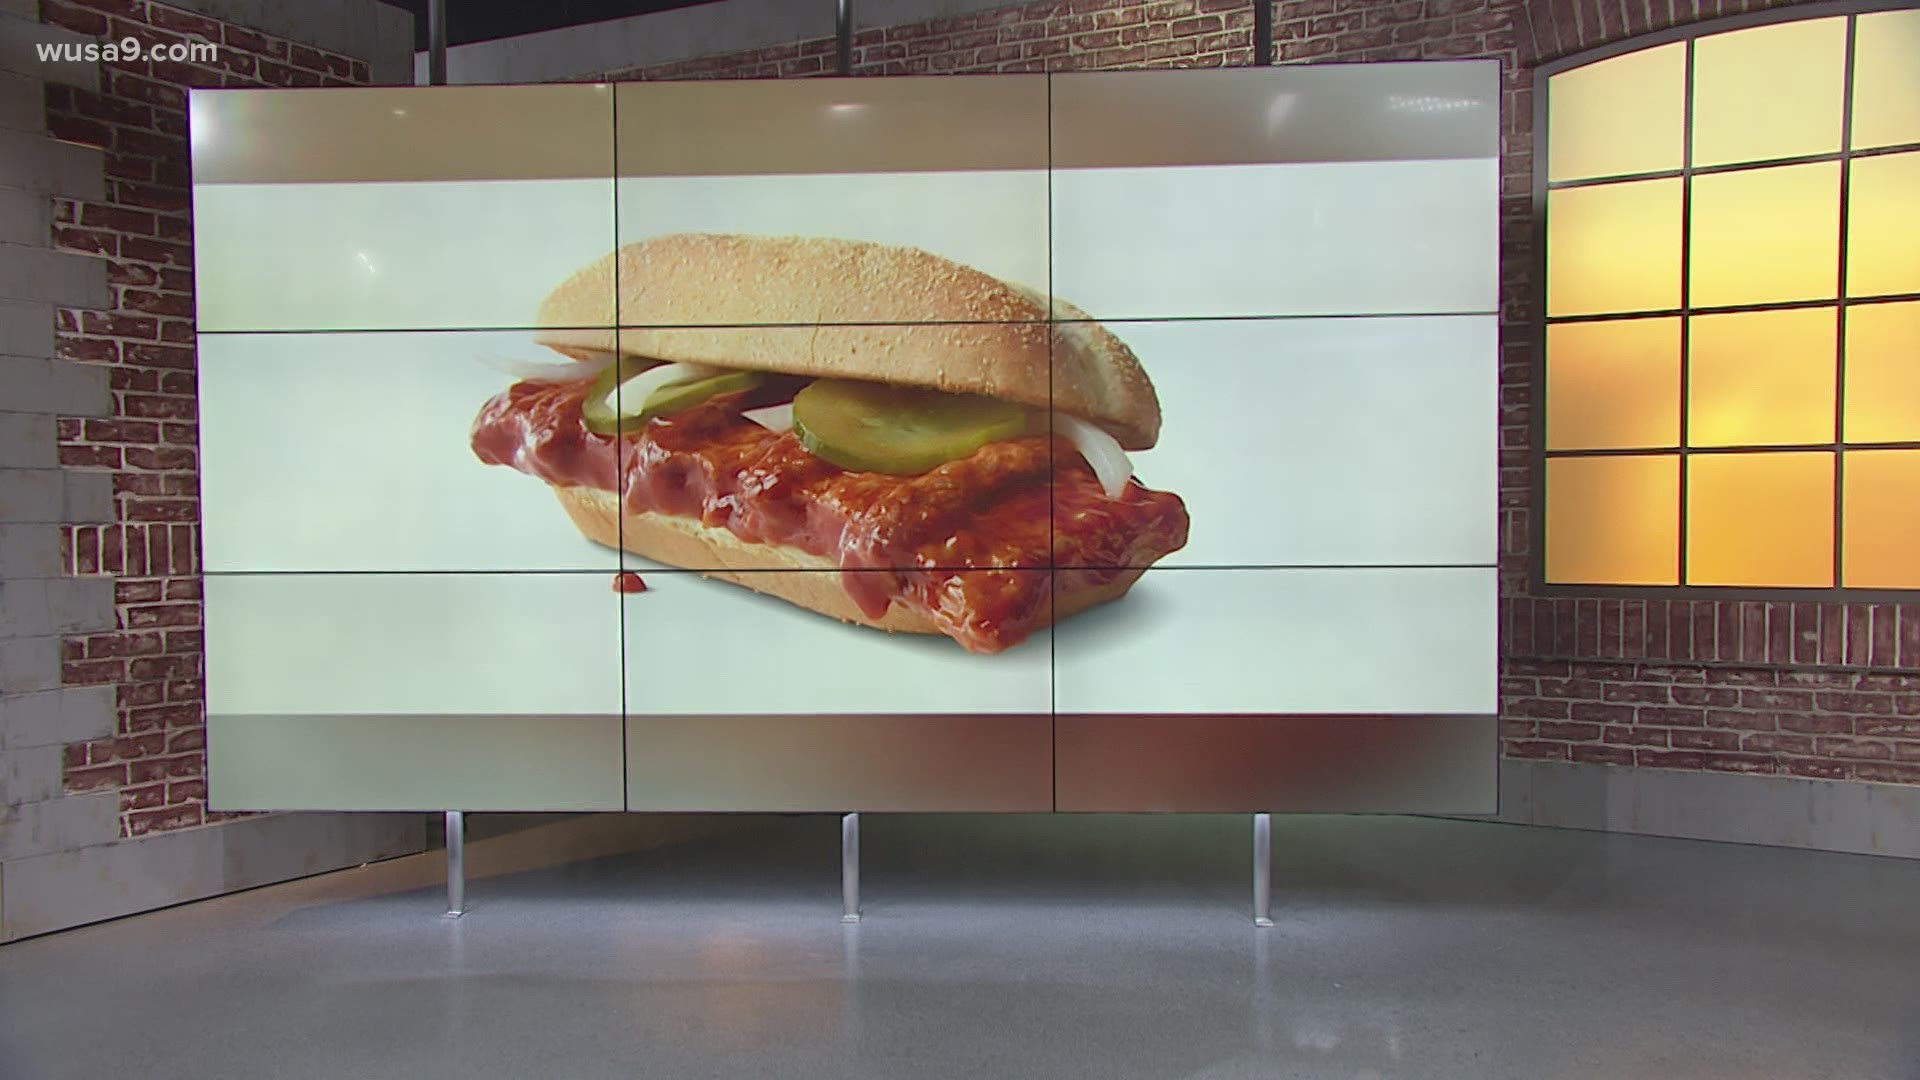 McDonald's is bringing back it's popular McRib sandwich on December 2.